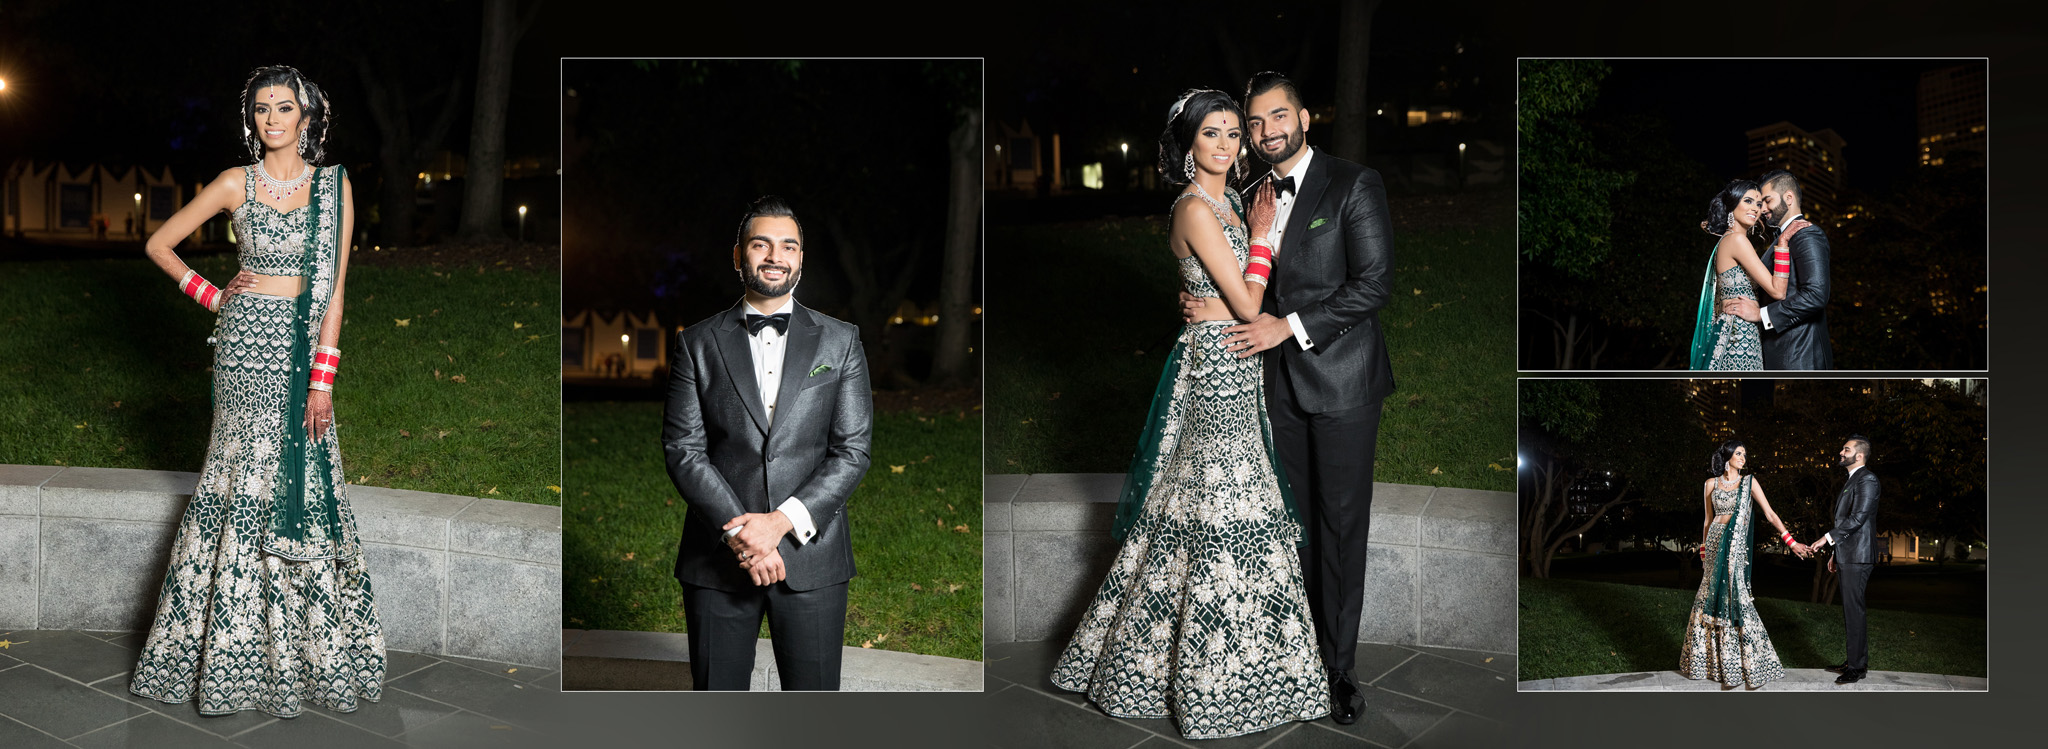 Indian wedding album design bride and groom portraits